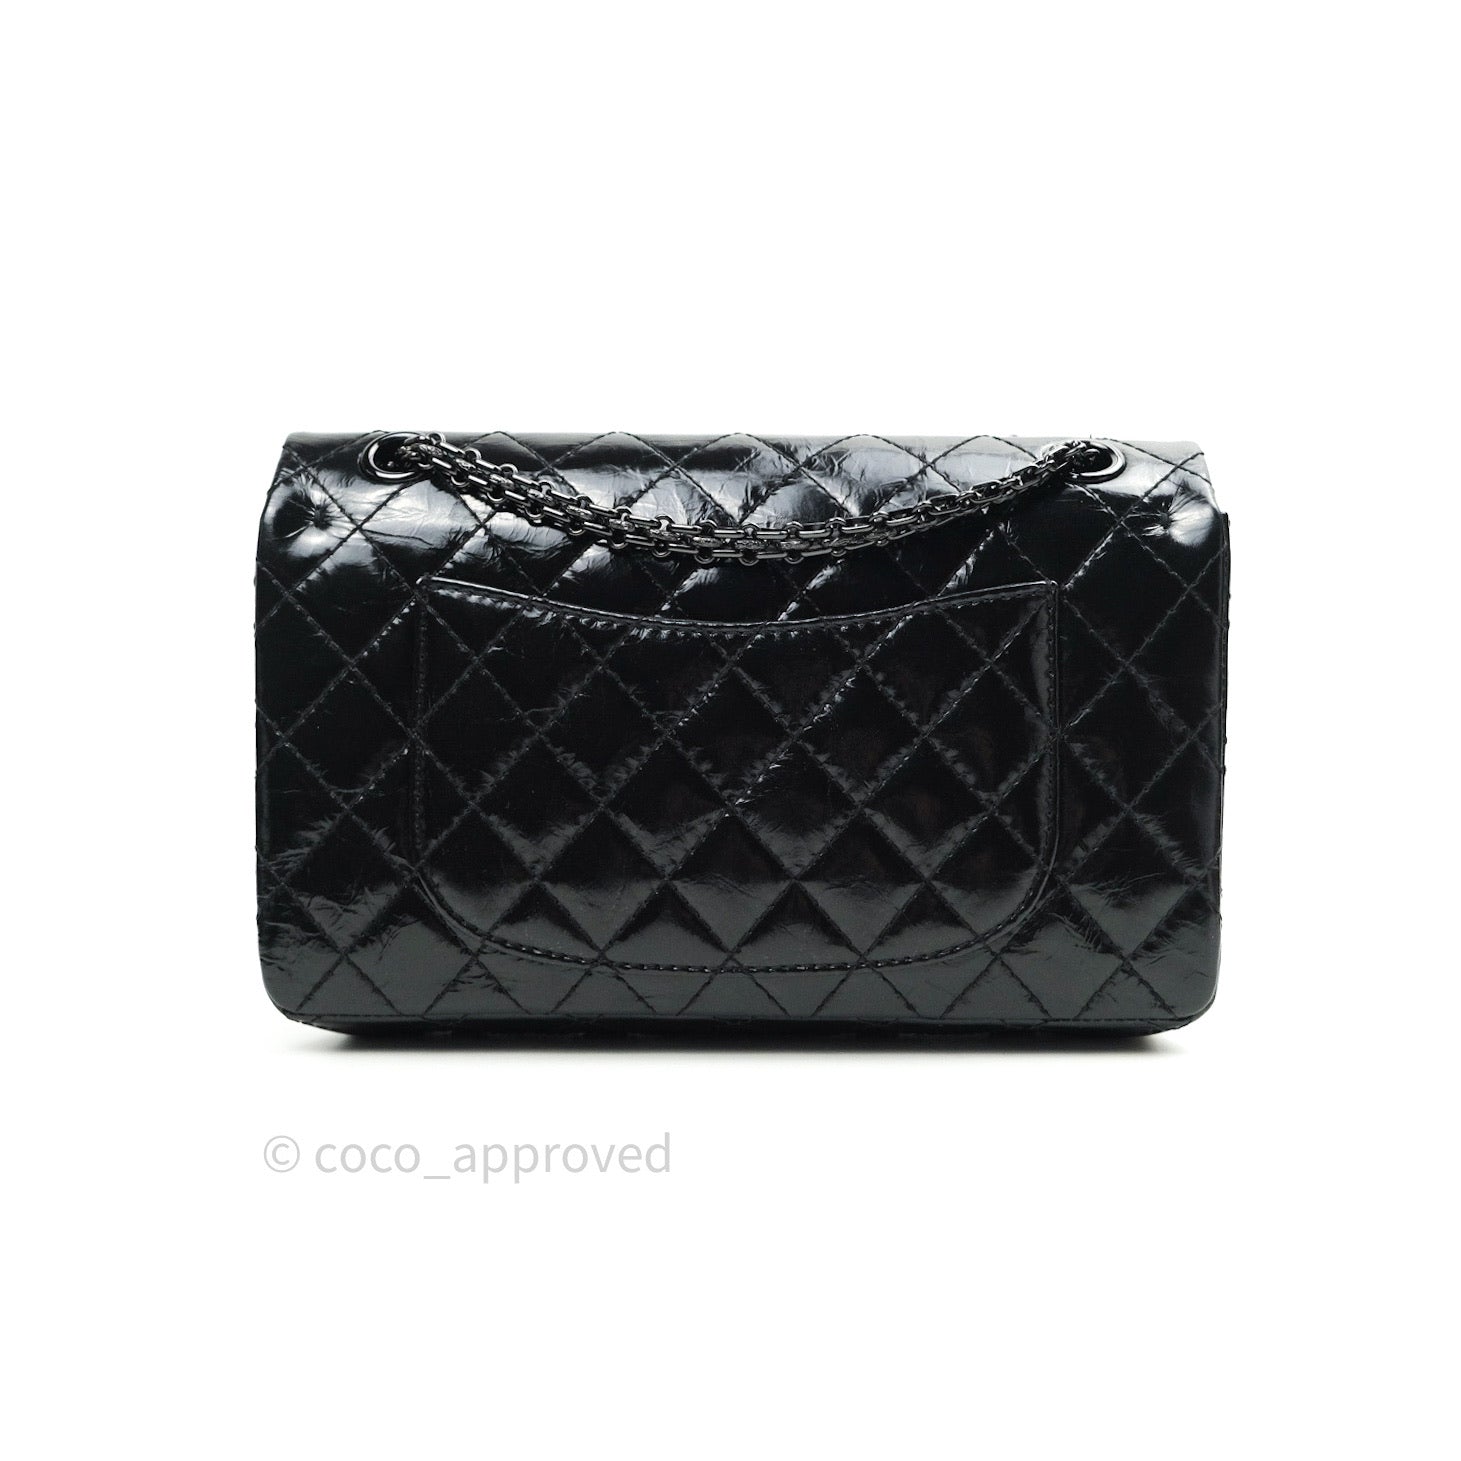 Chanel 2.55 Reissue Mini Flap Shoulder Bag Metallic Midnight Blue